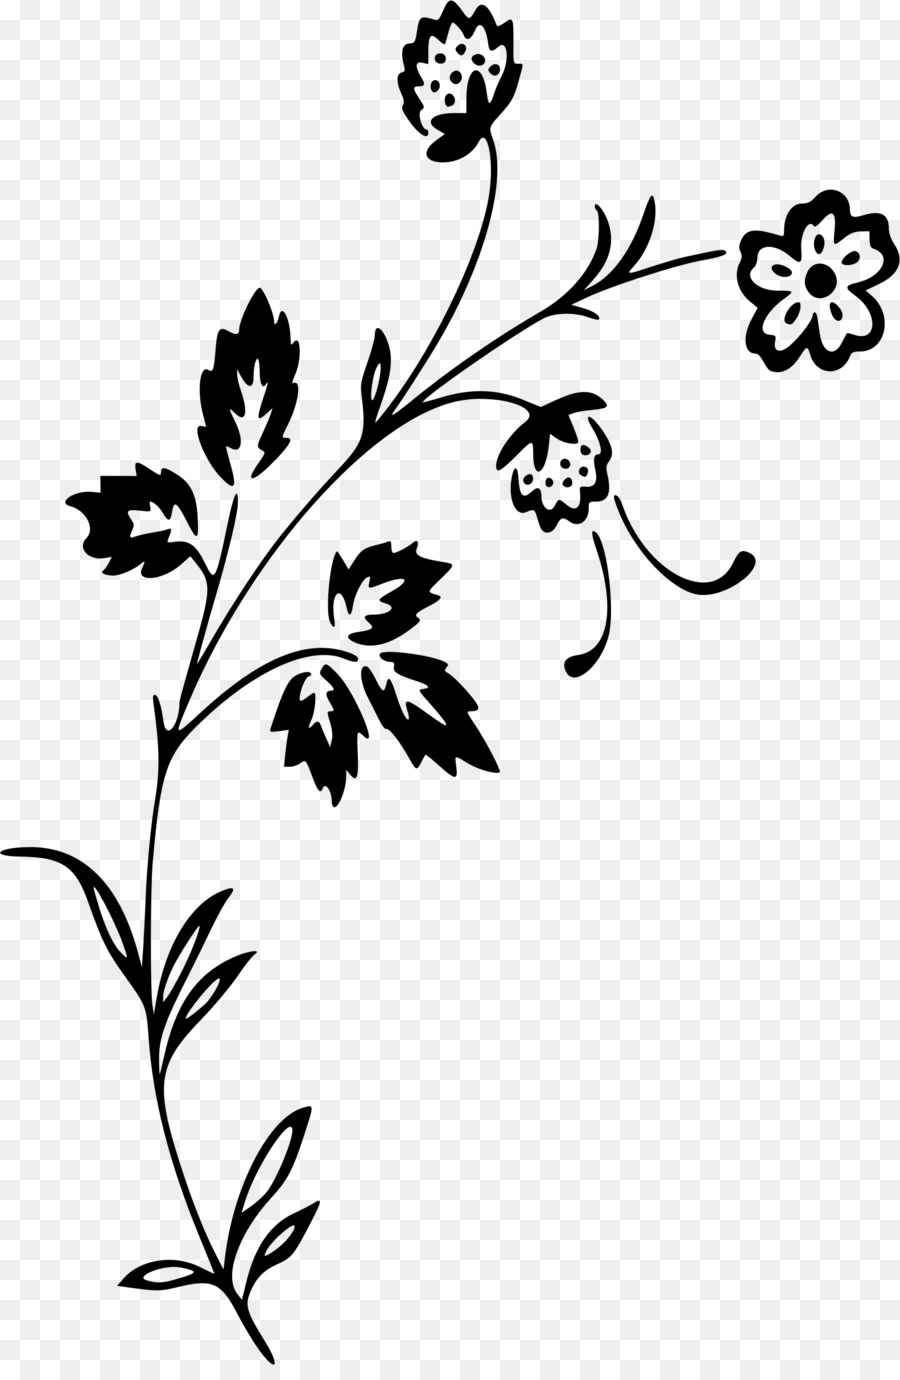 Clipart - Chrysantheme Blumen